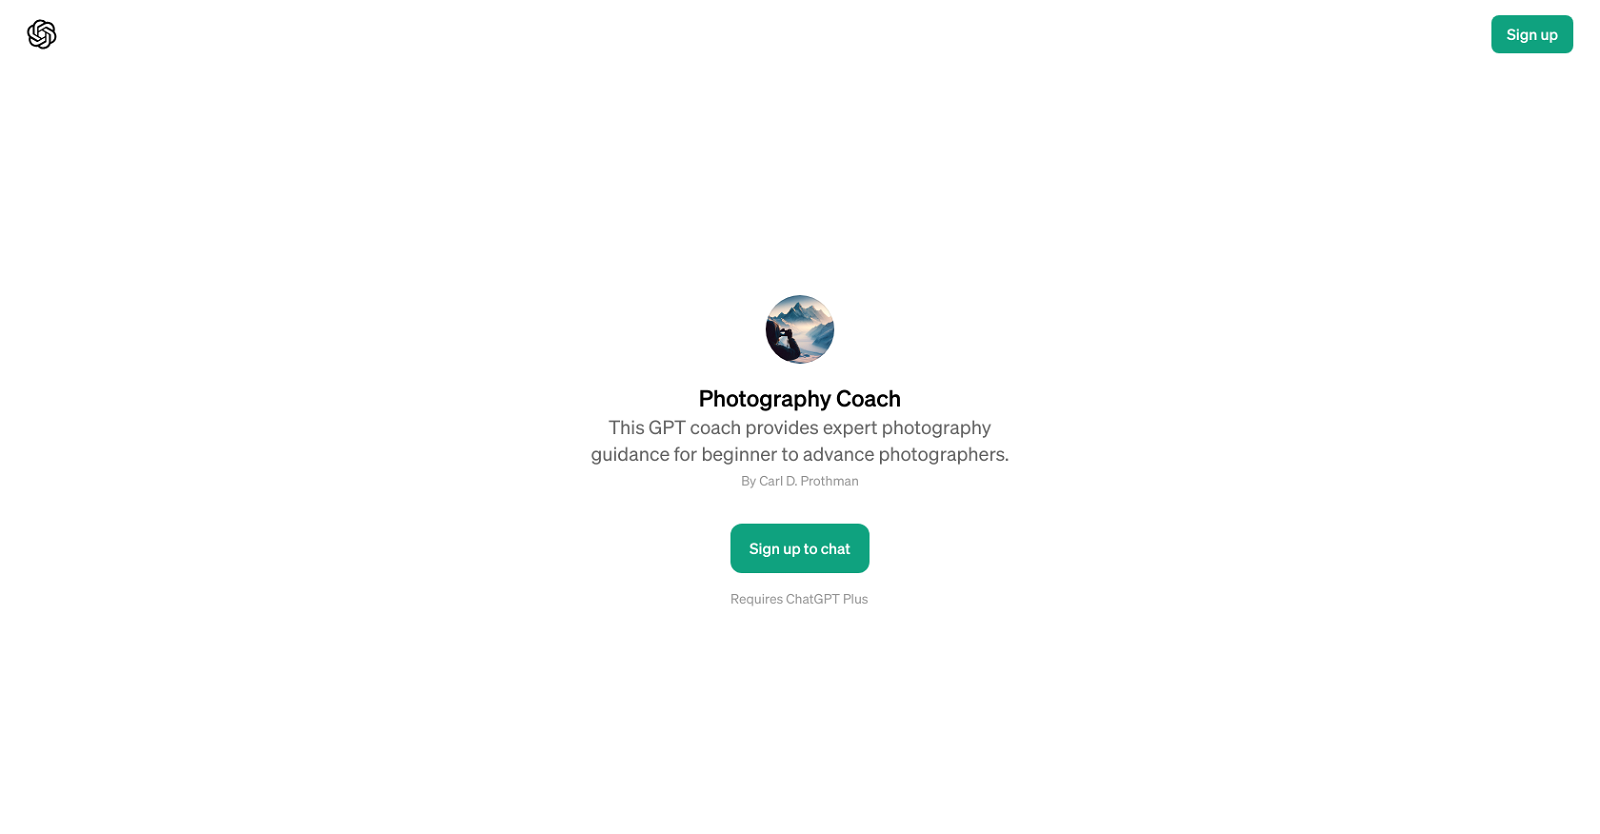 Photography Coach website